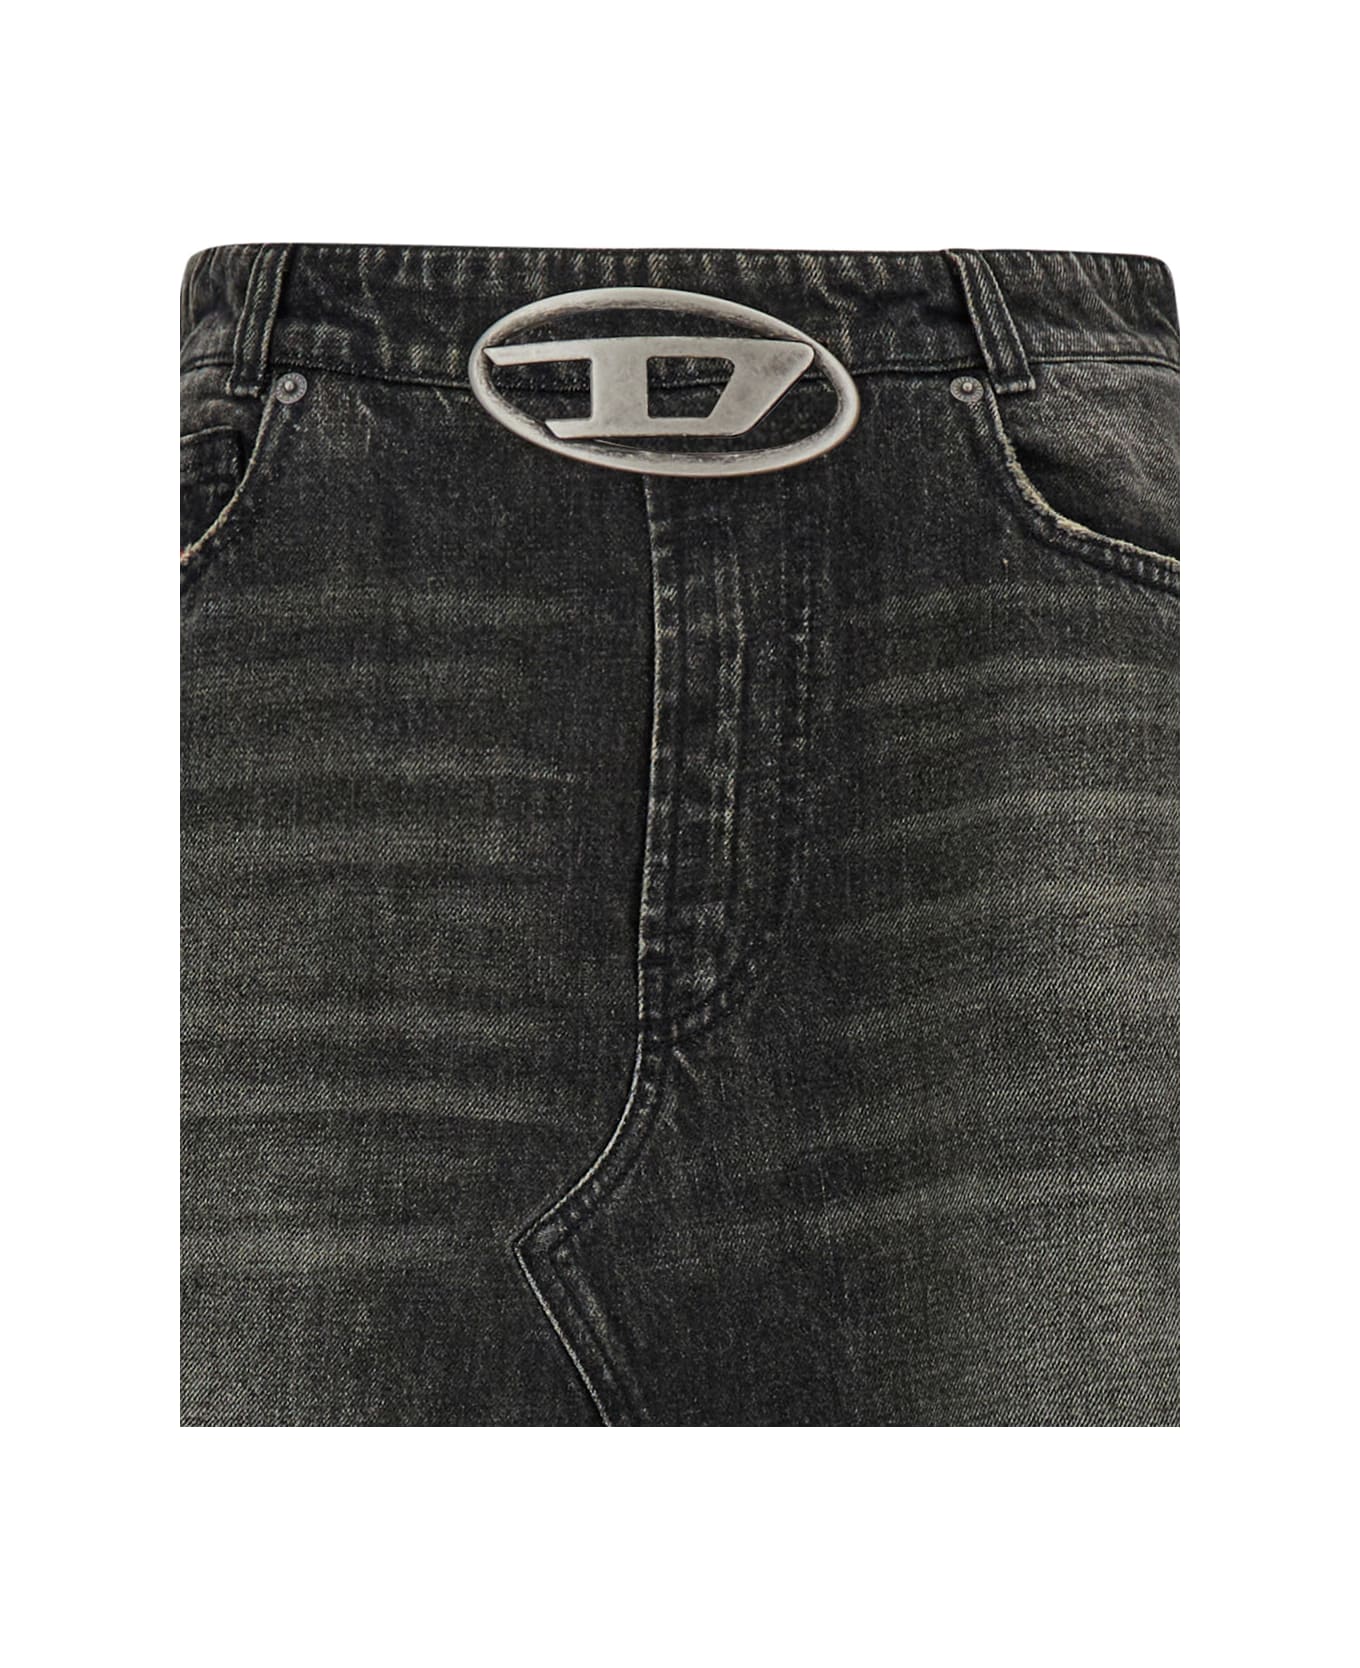 Diesel Balck Long Skirt With Oval D Detail In Denim Woman - Black スカート